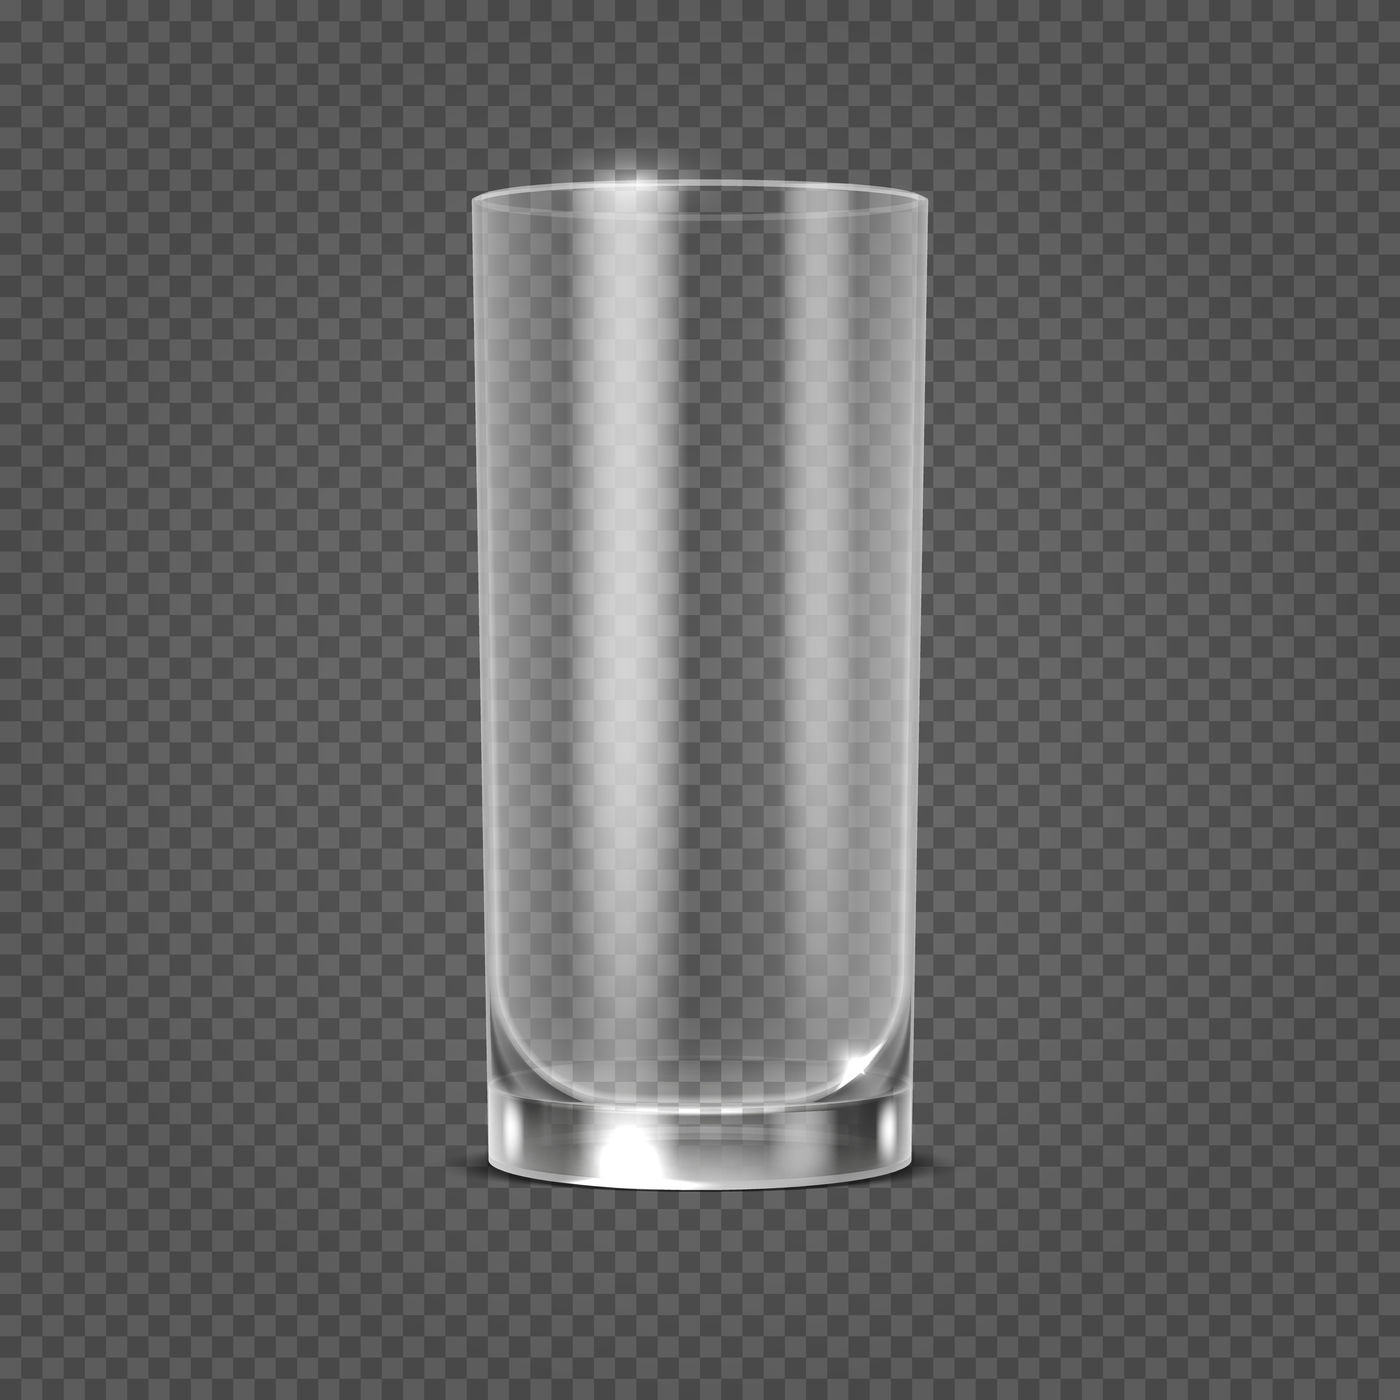 https://media1.thehungryjpeg.com/thumbs2/ori_3490443_1b76cac943aac966e4a246bdb06142e9f21ca4a7_vector-empty-realistic-drinking-glass-on-transparent-checkered-backgro.jpg